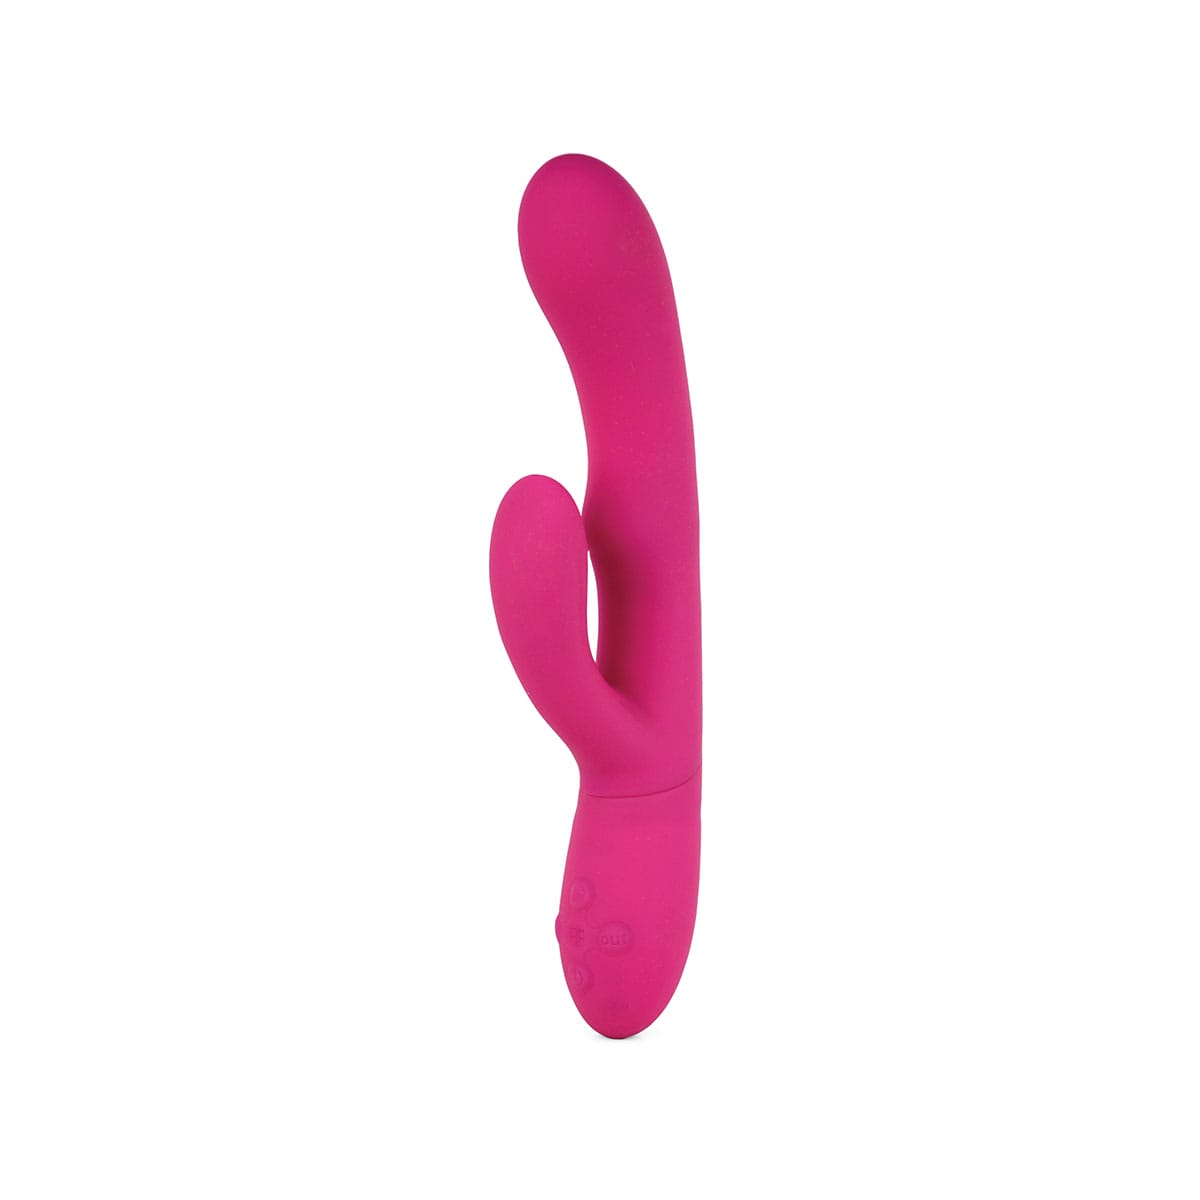 Buy a Femme Funn Ultra Rabbit  Pink vibrator.